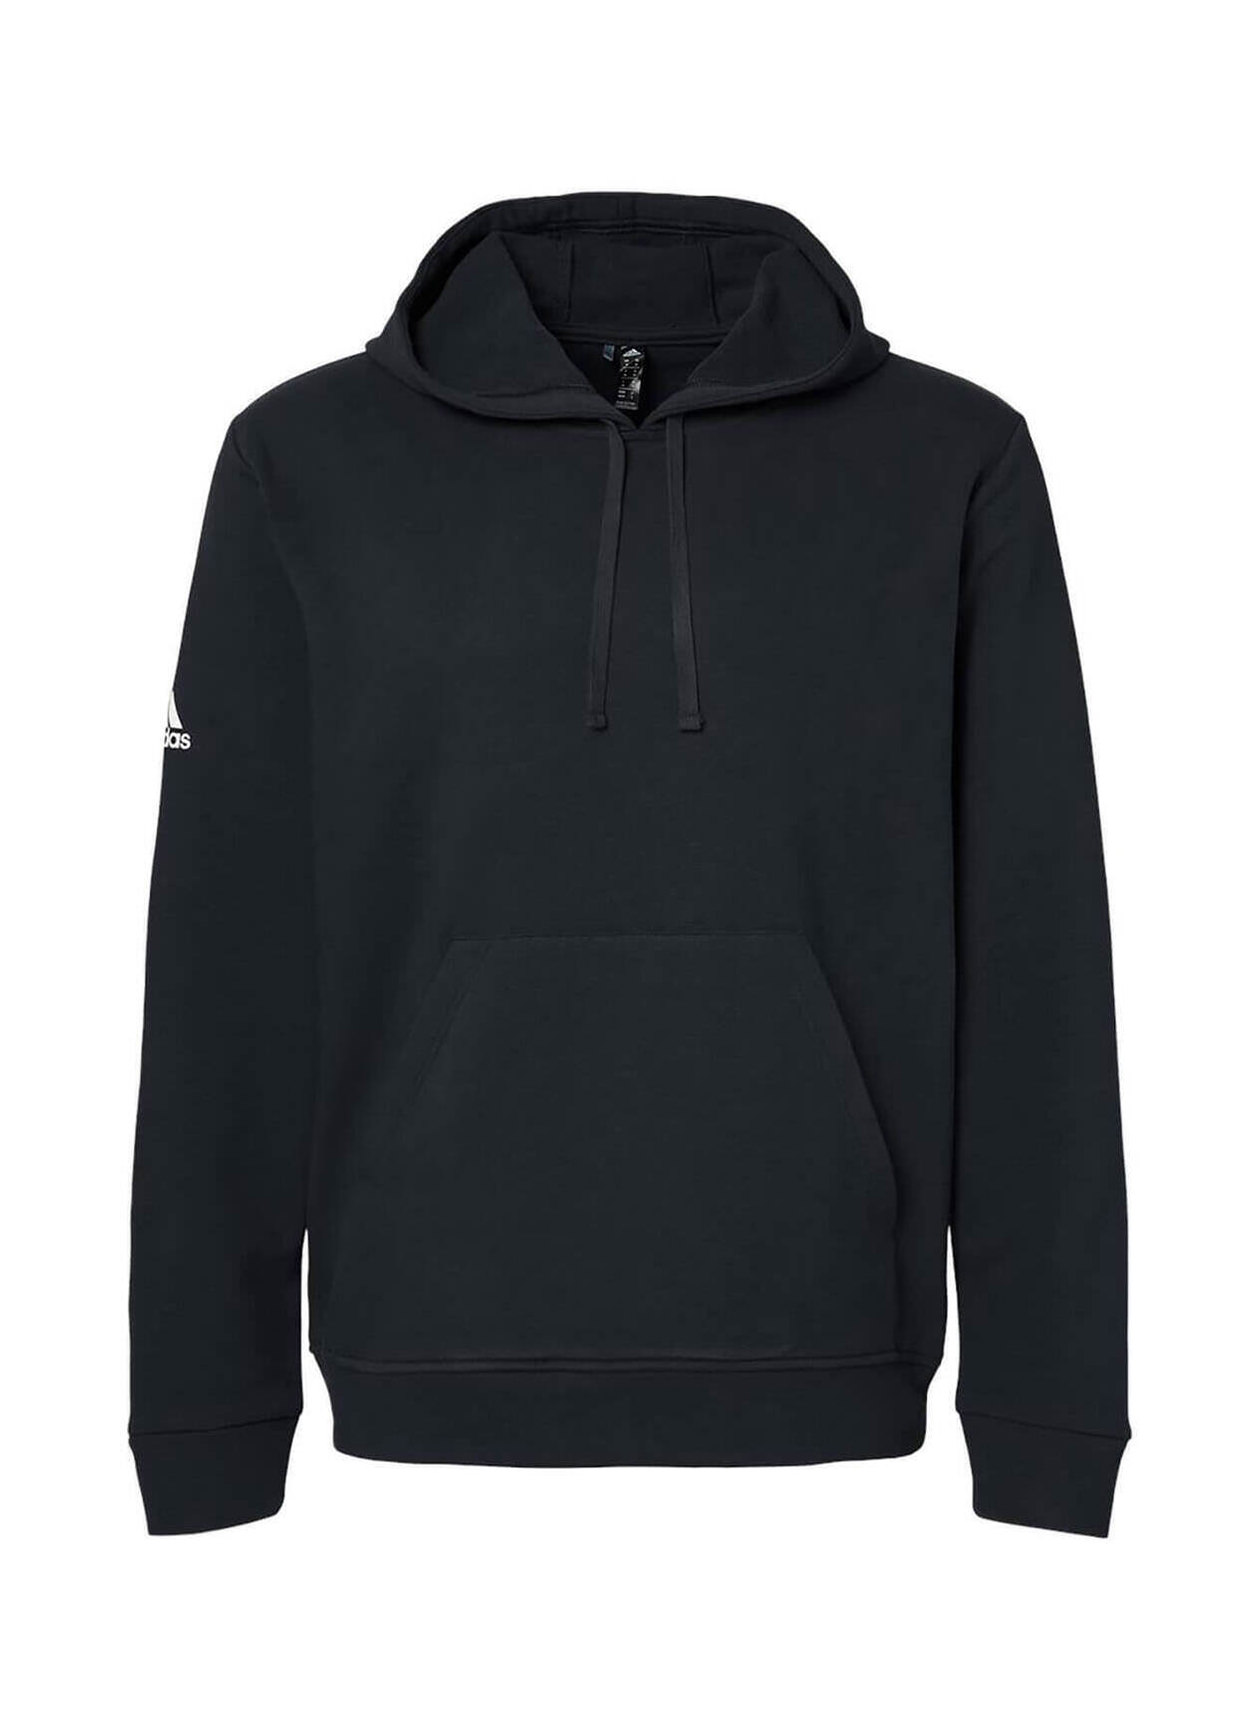 Adidas Men's Black Fleece Hooded Sweatshirt